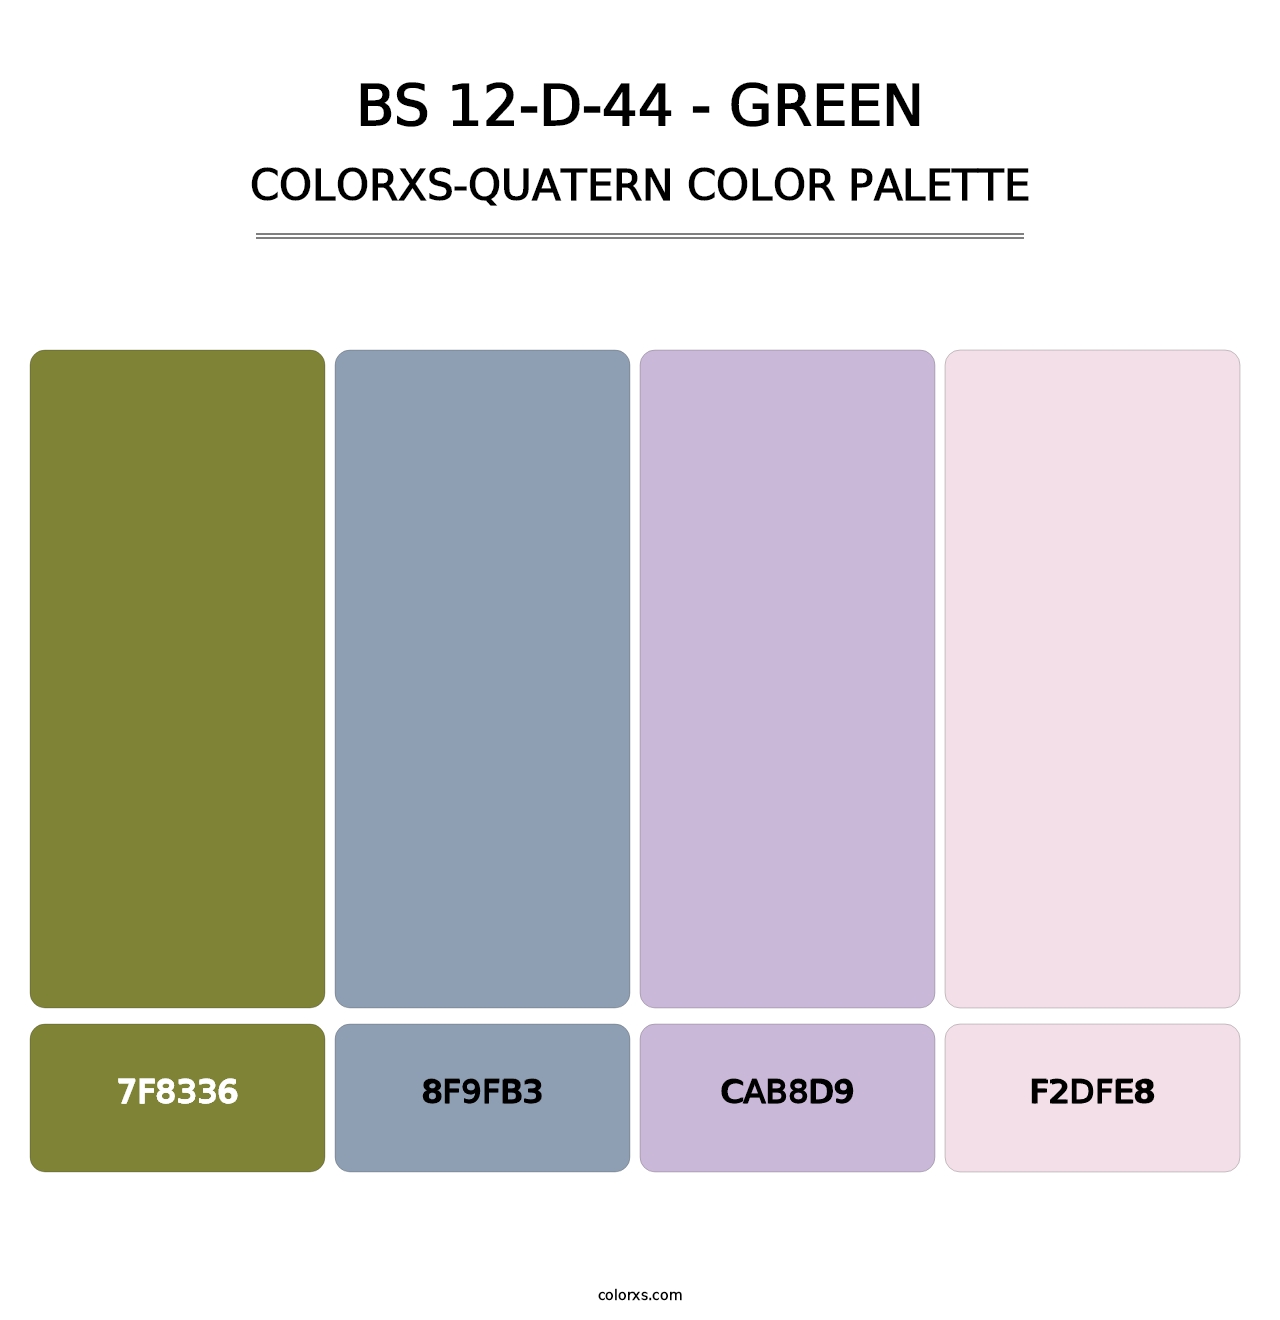 BS 12-D-44 - Green - Colorxs Quatern Palette